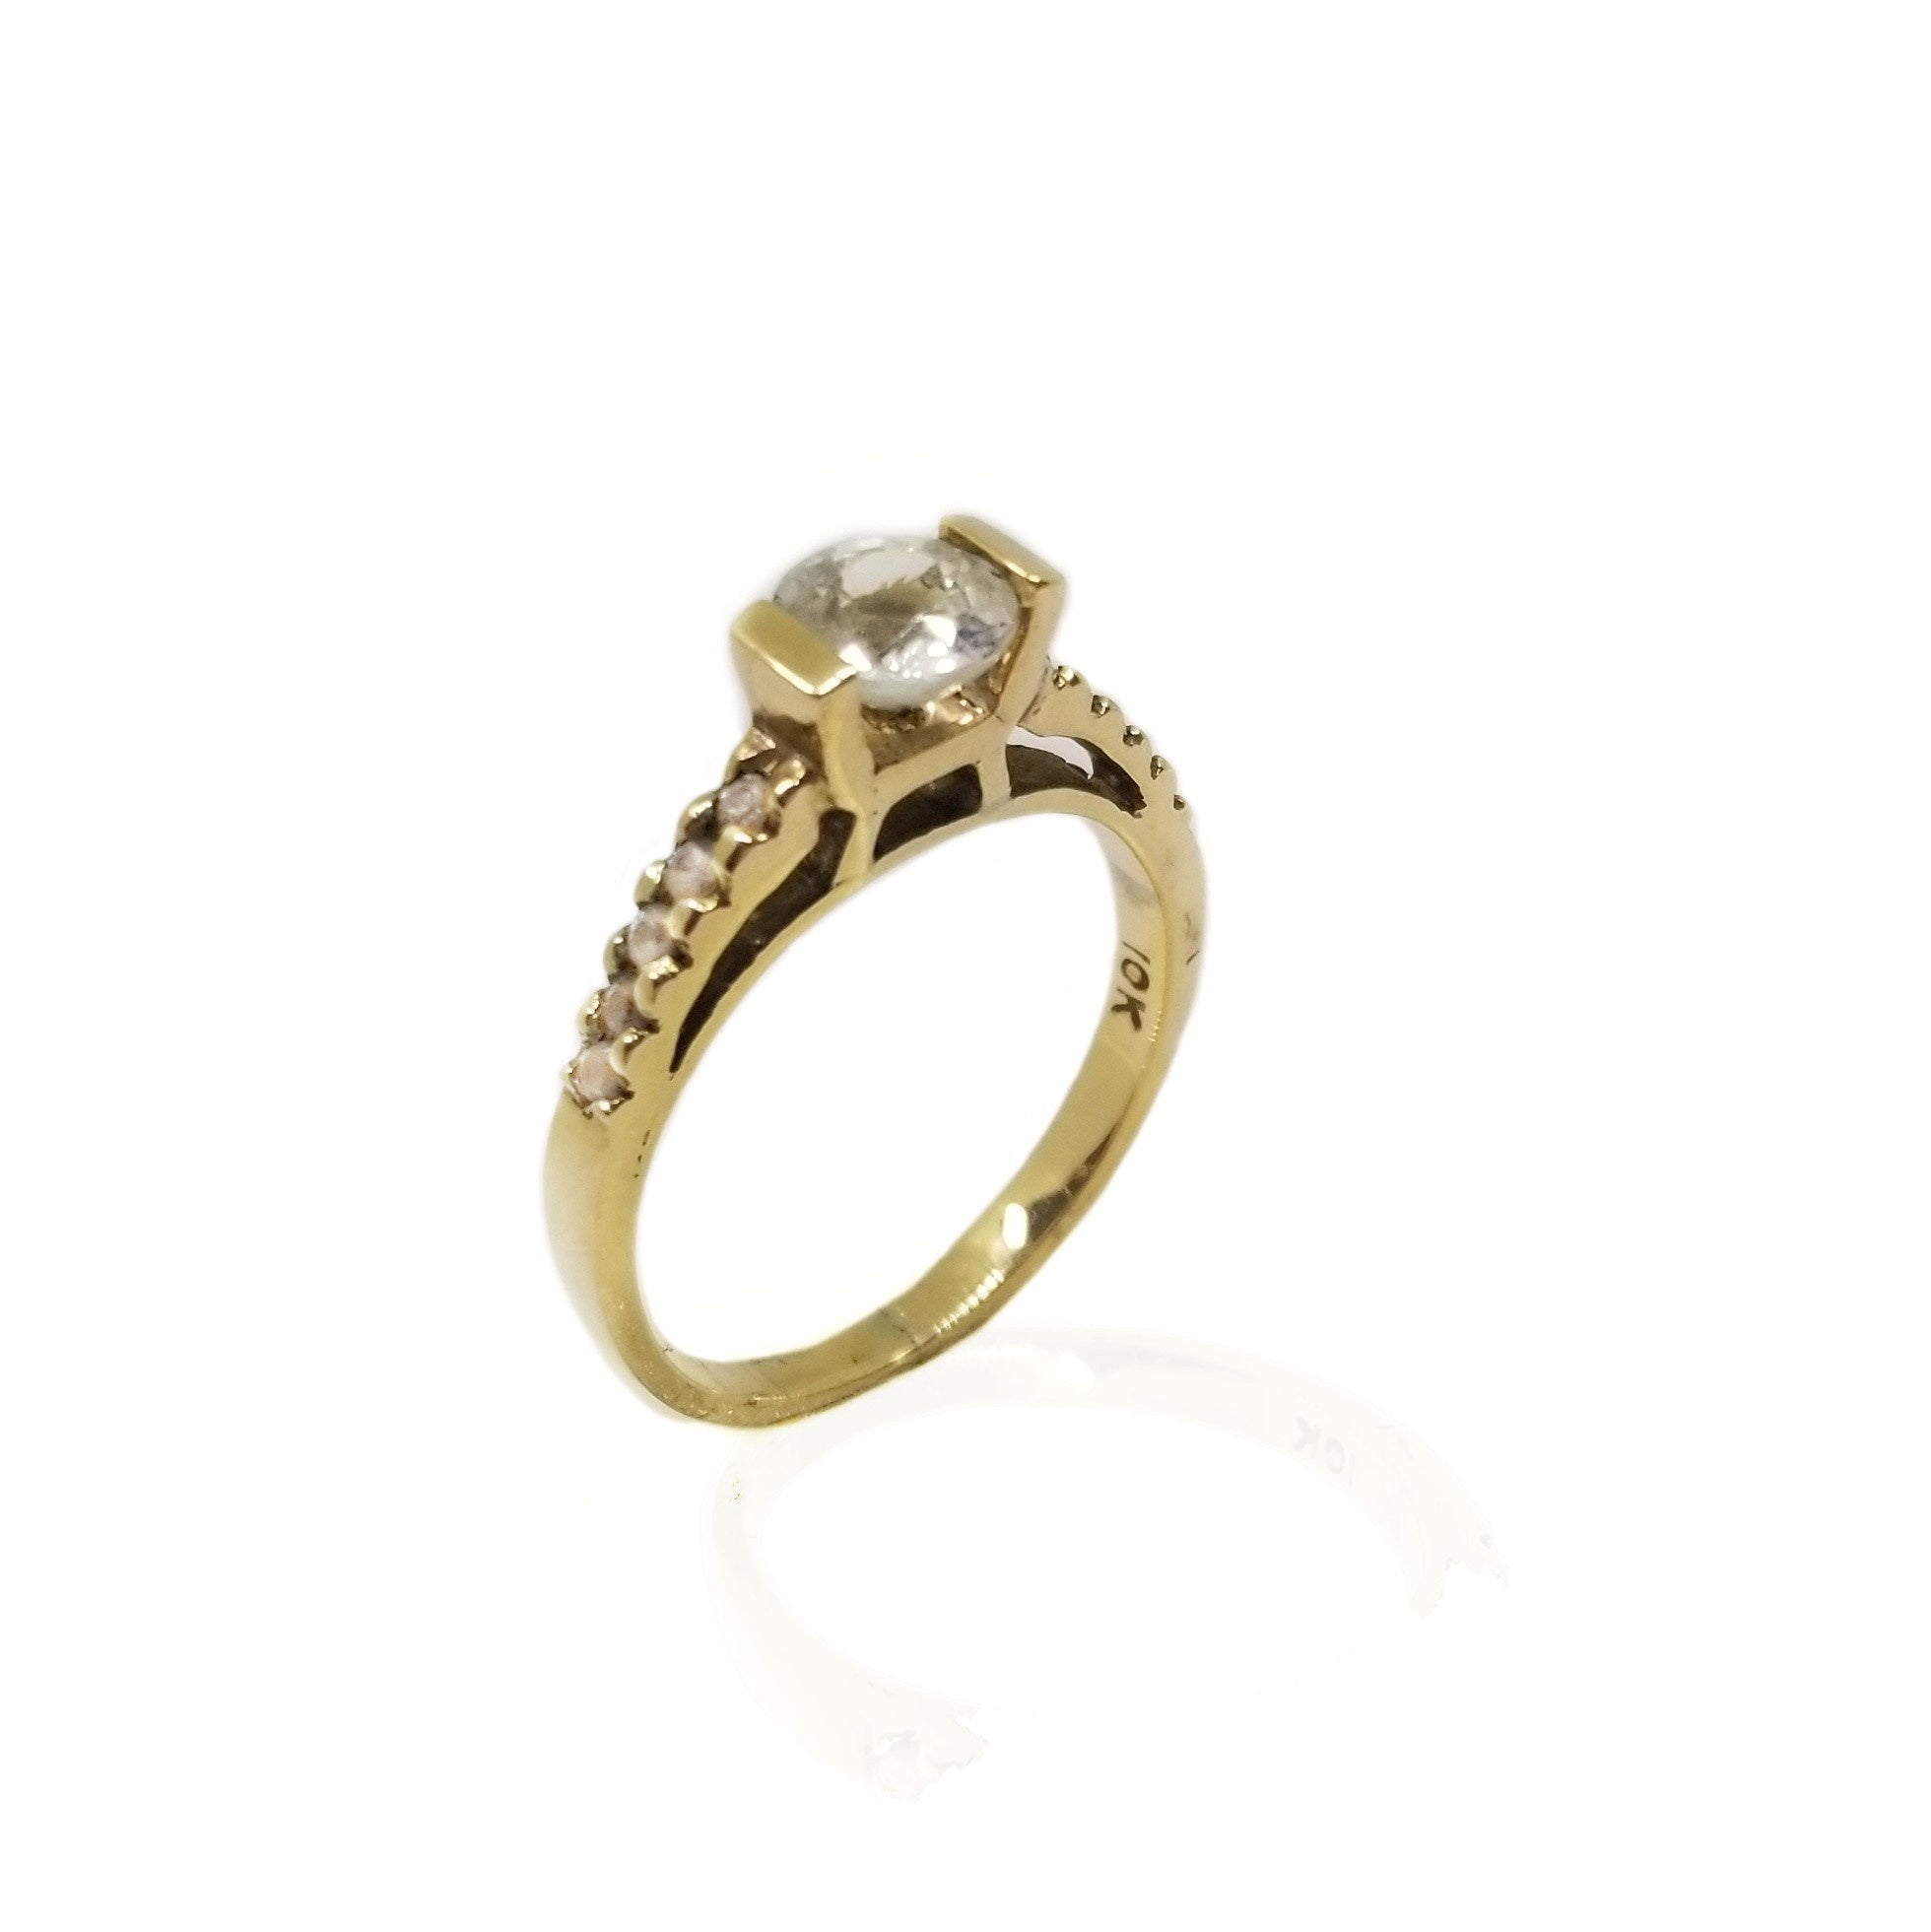 White sapphire engagement rings